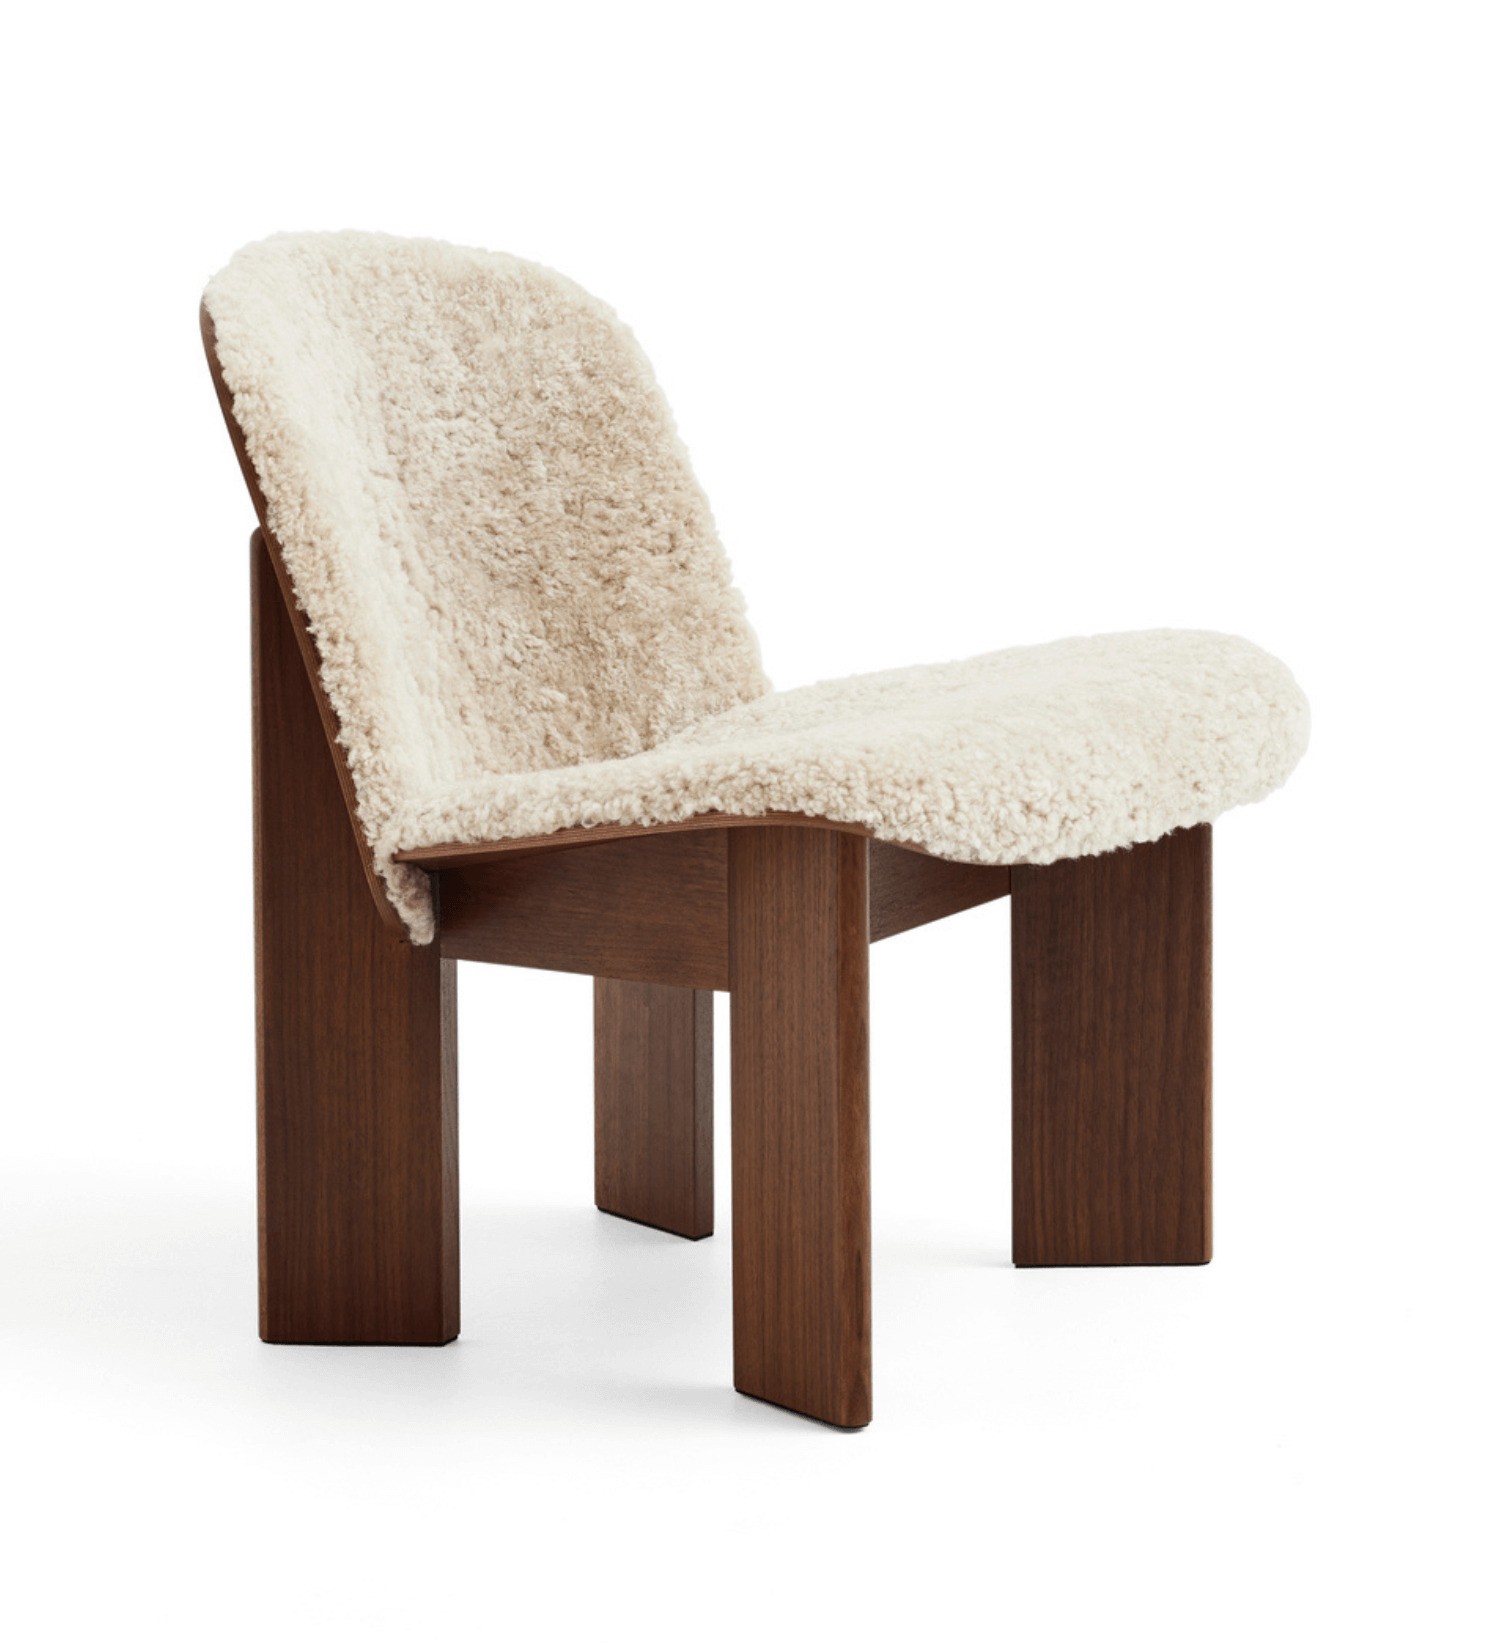 Fotel Chisel Lounge Chair marki Hay